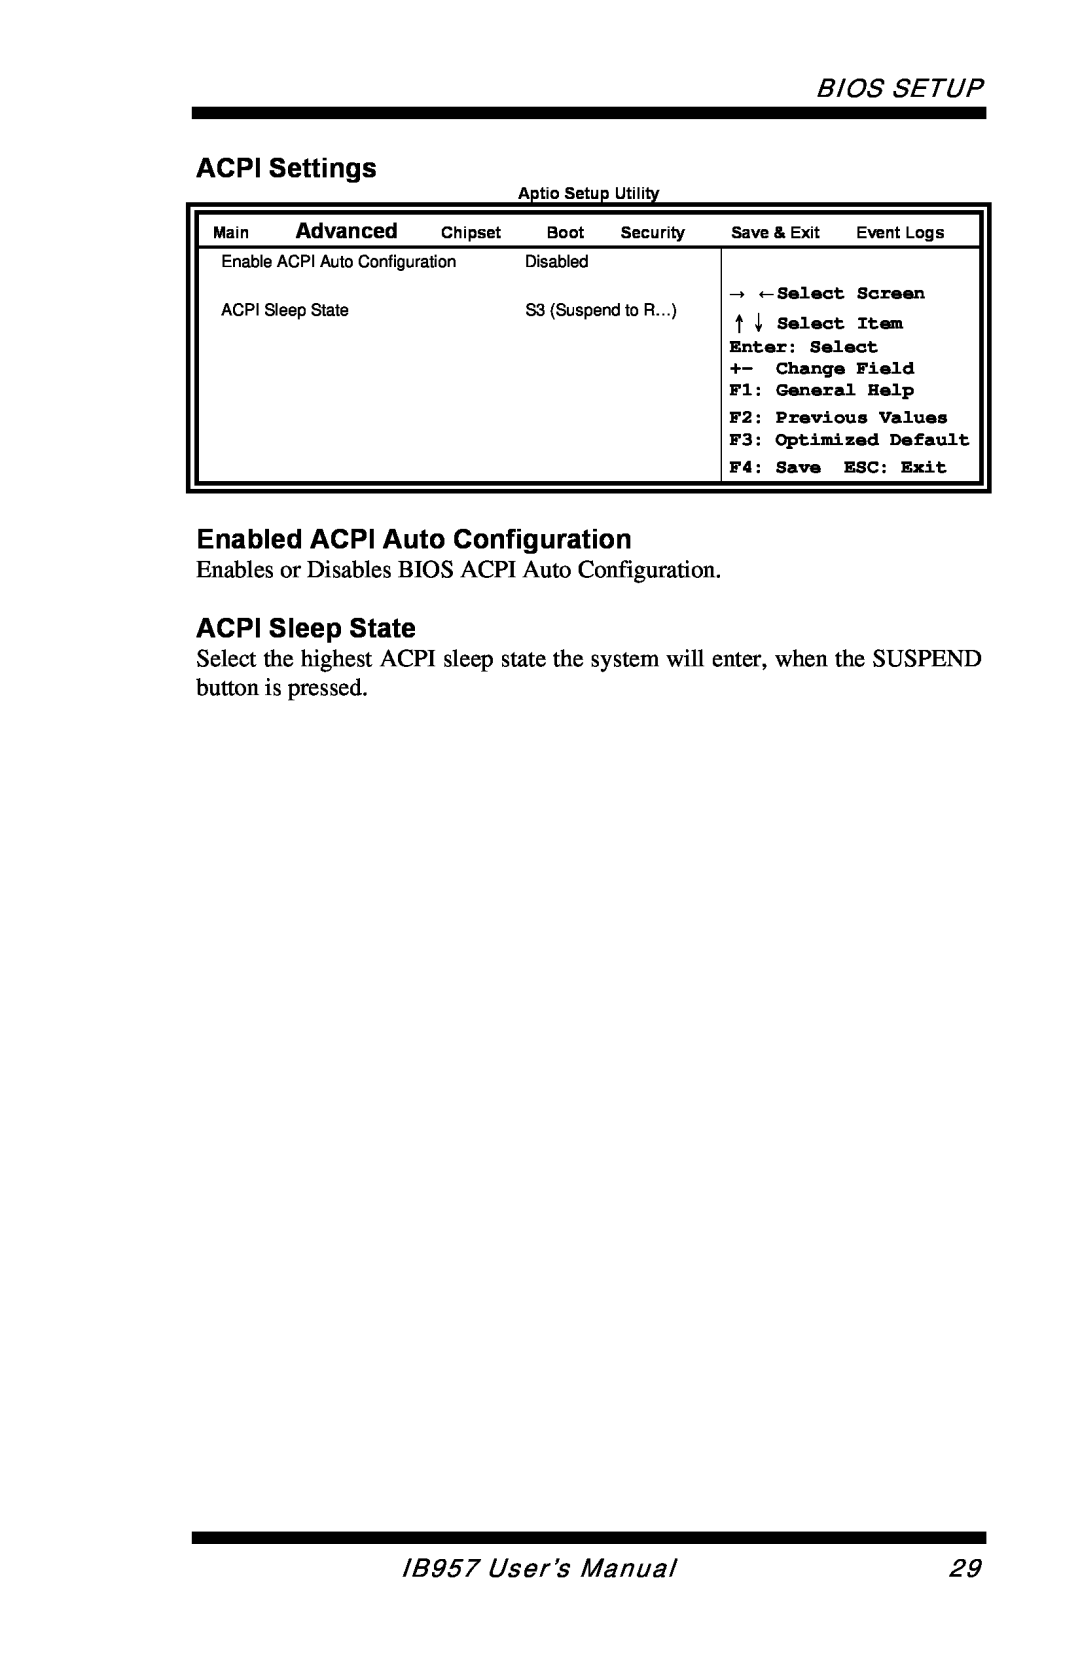 Intel ACPI Settings, Enabled ACPI Auto Configuration, ACPI Sleep State, Bios Setup, IB957 User’s Manual, Advanced 